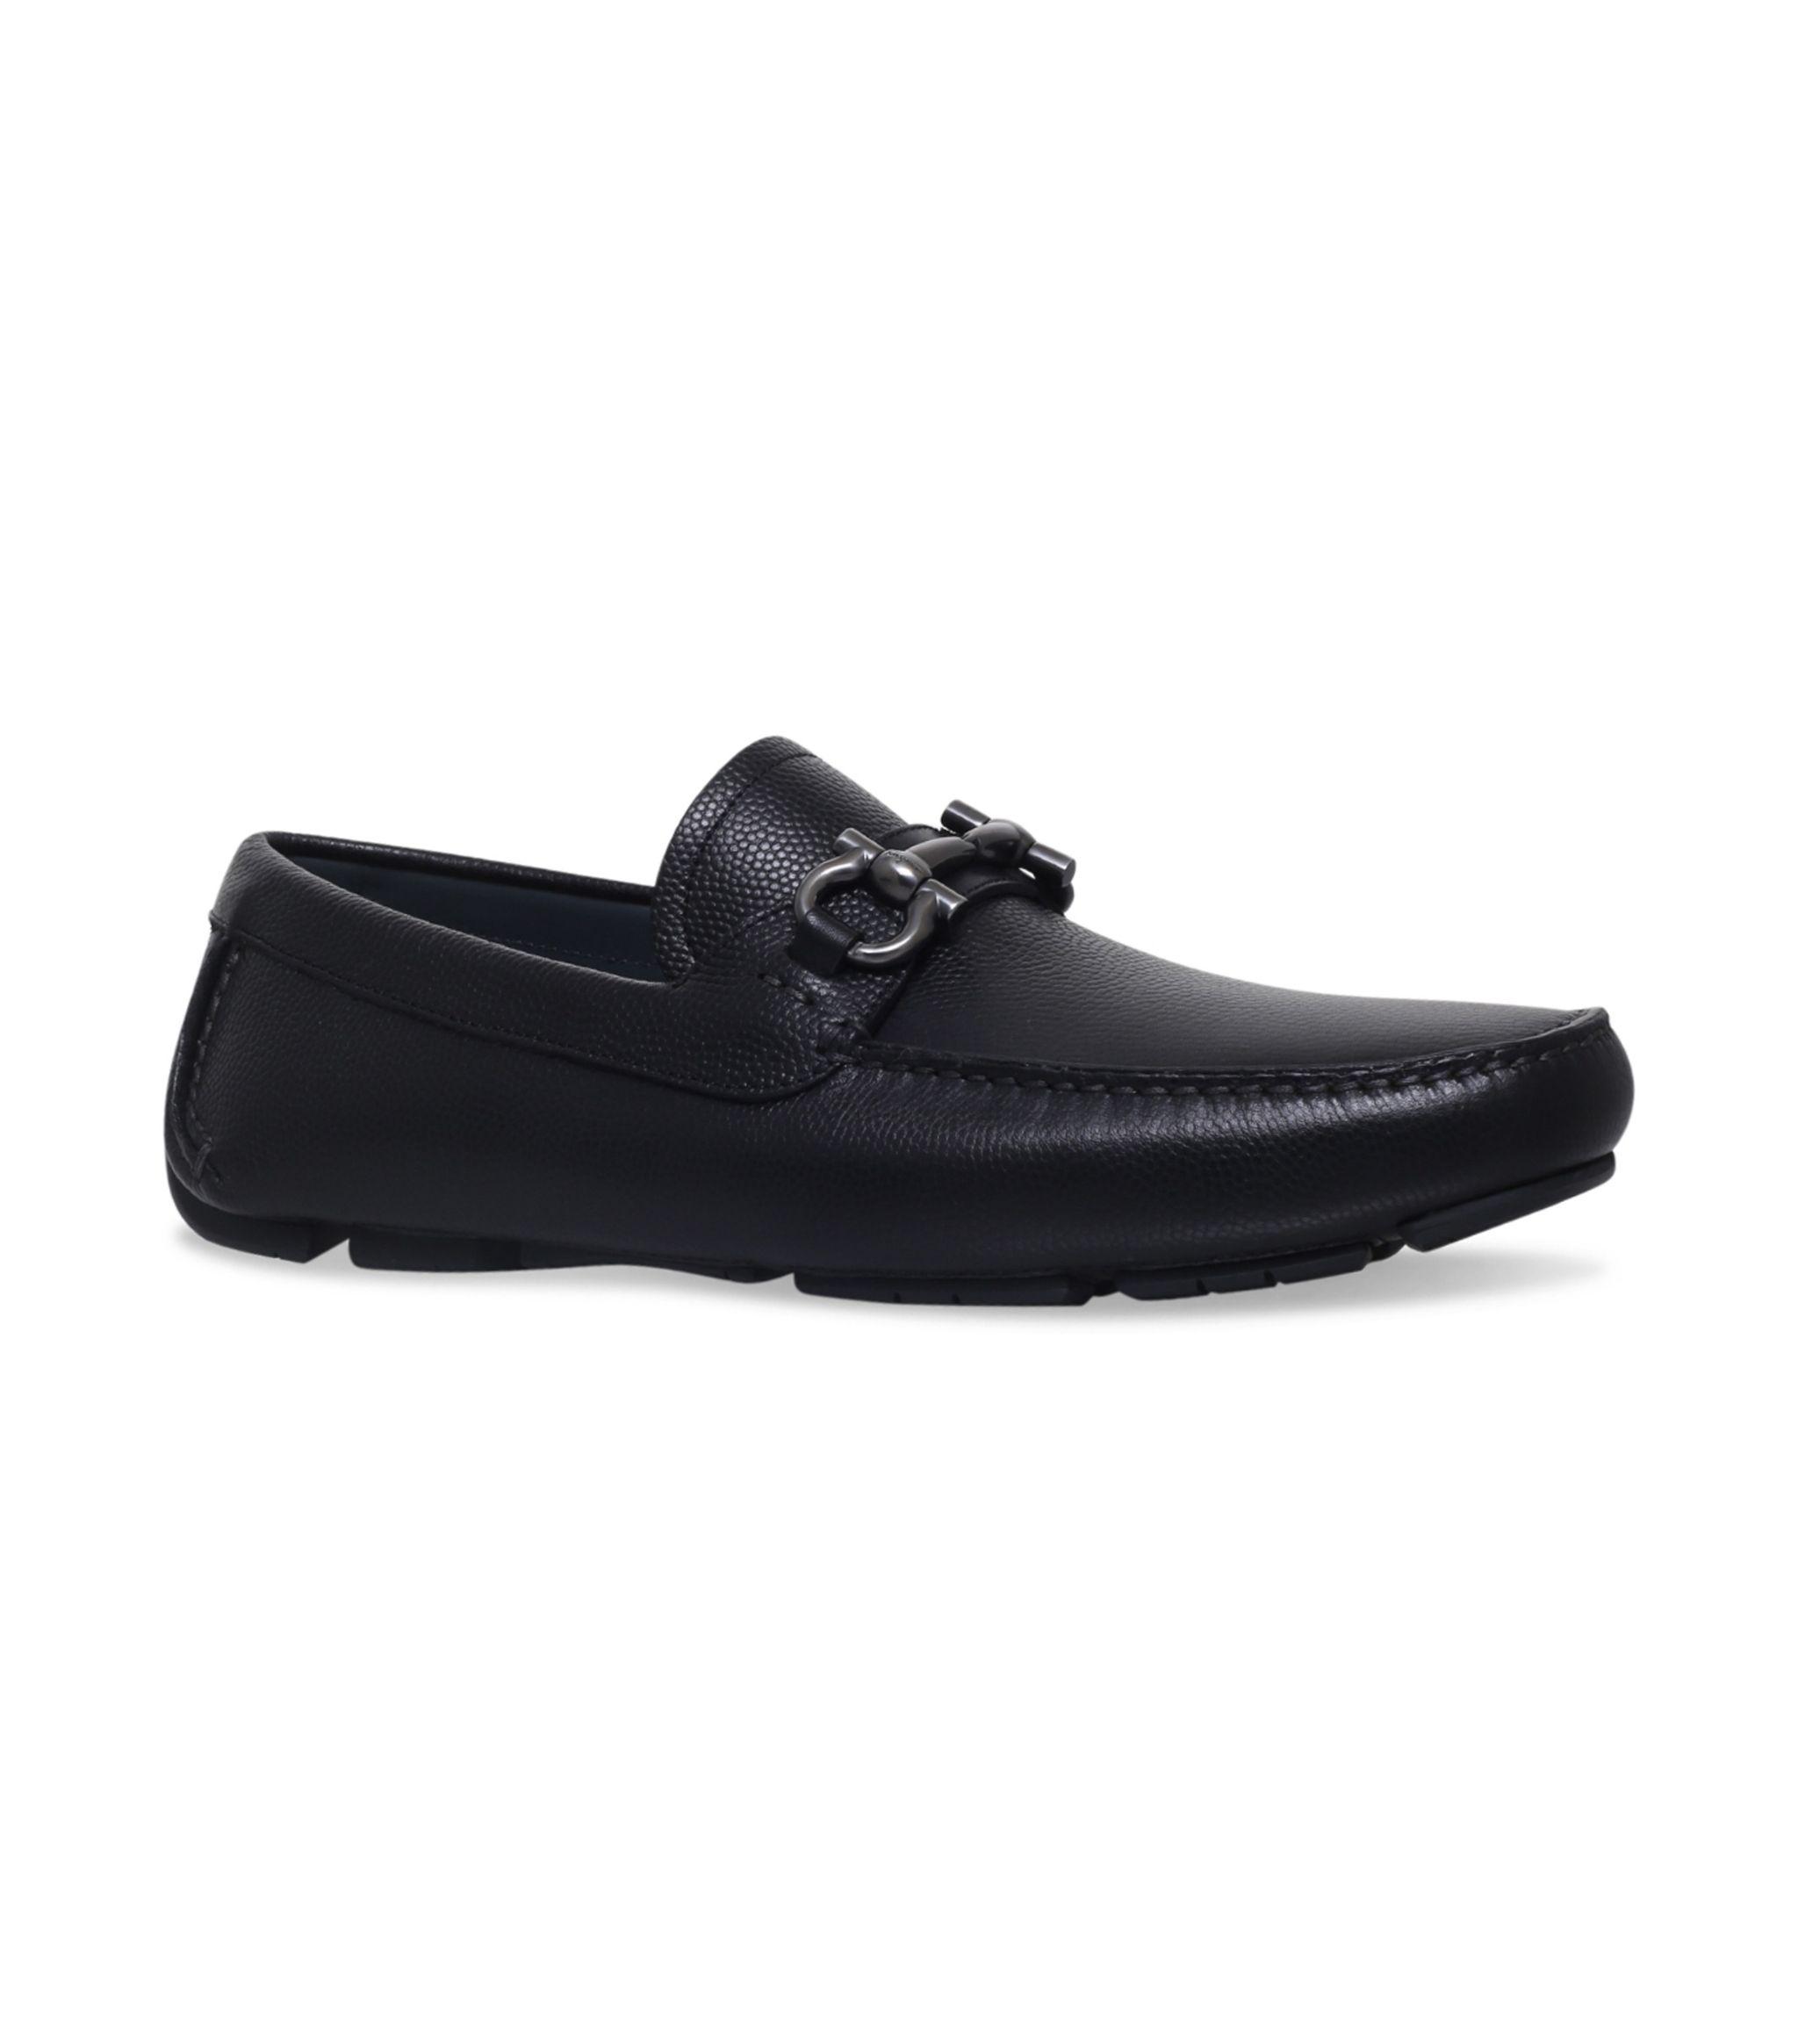 Ferragamo Leather Parigi Driving Shoes in Black for Men - Save 2% - Lyst